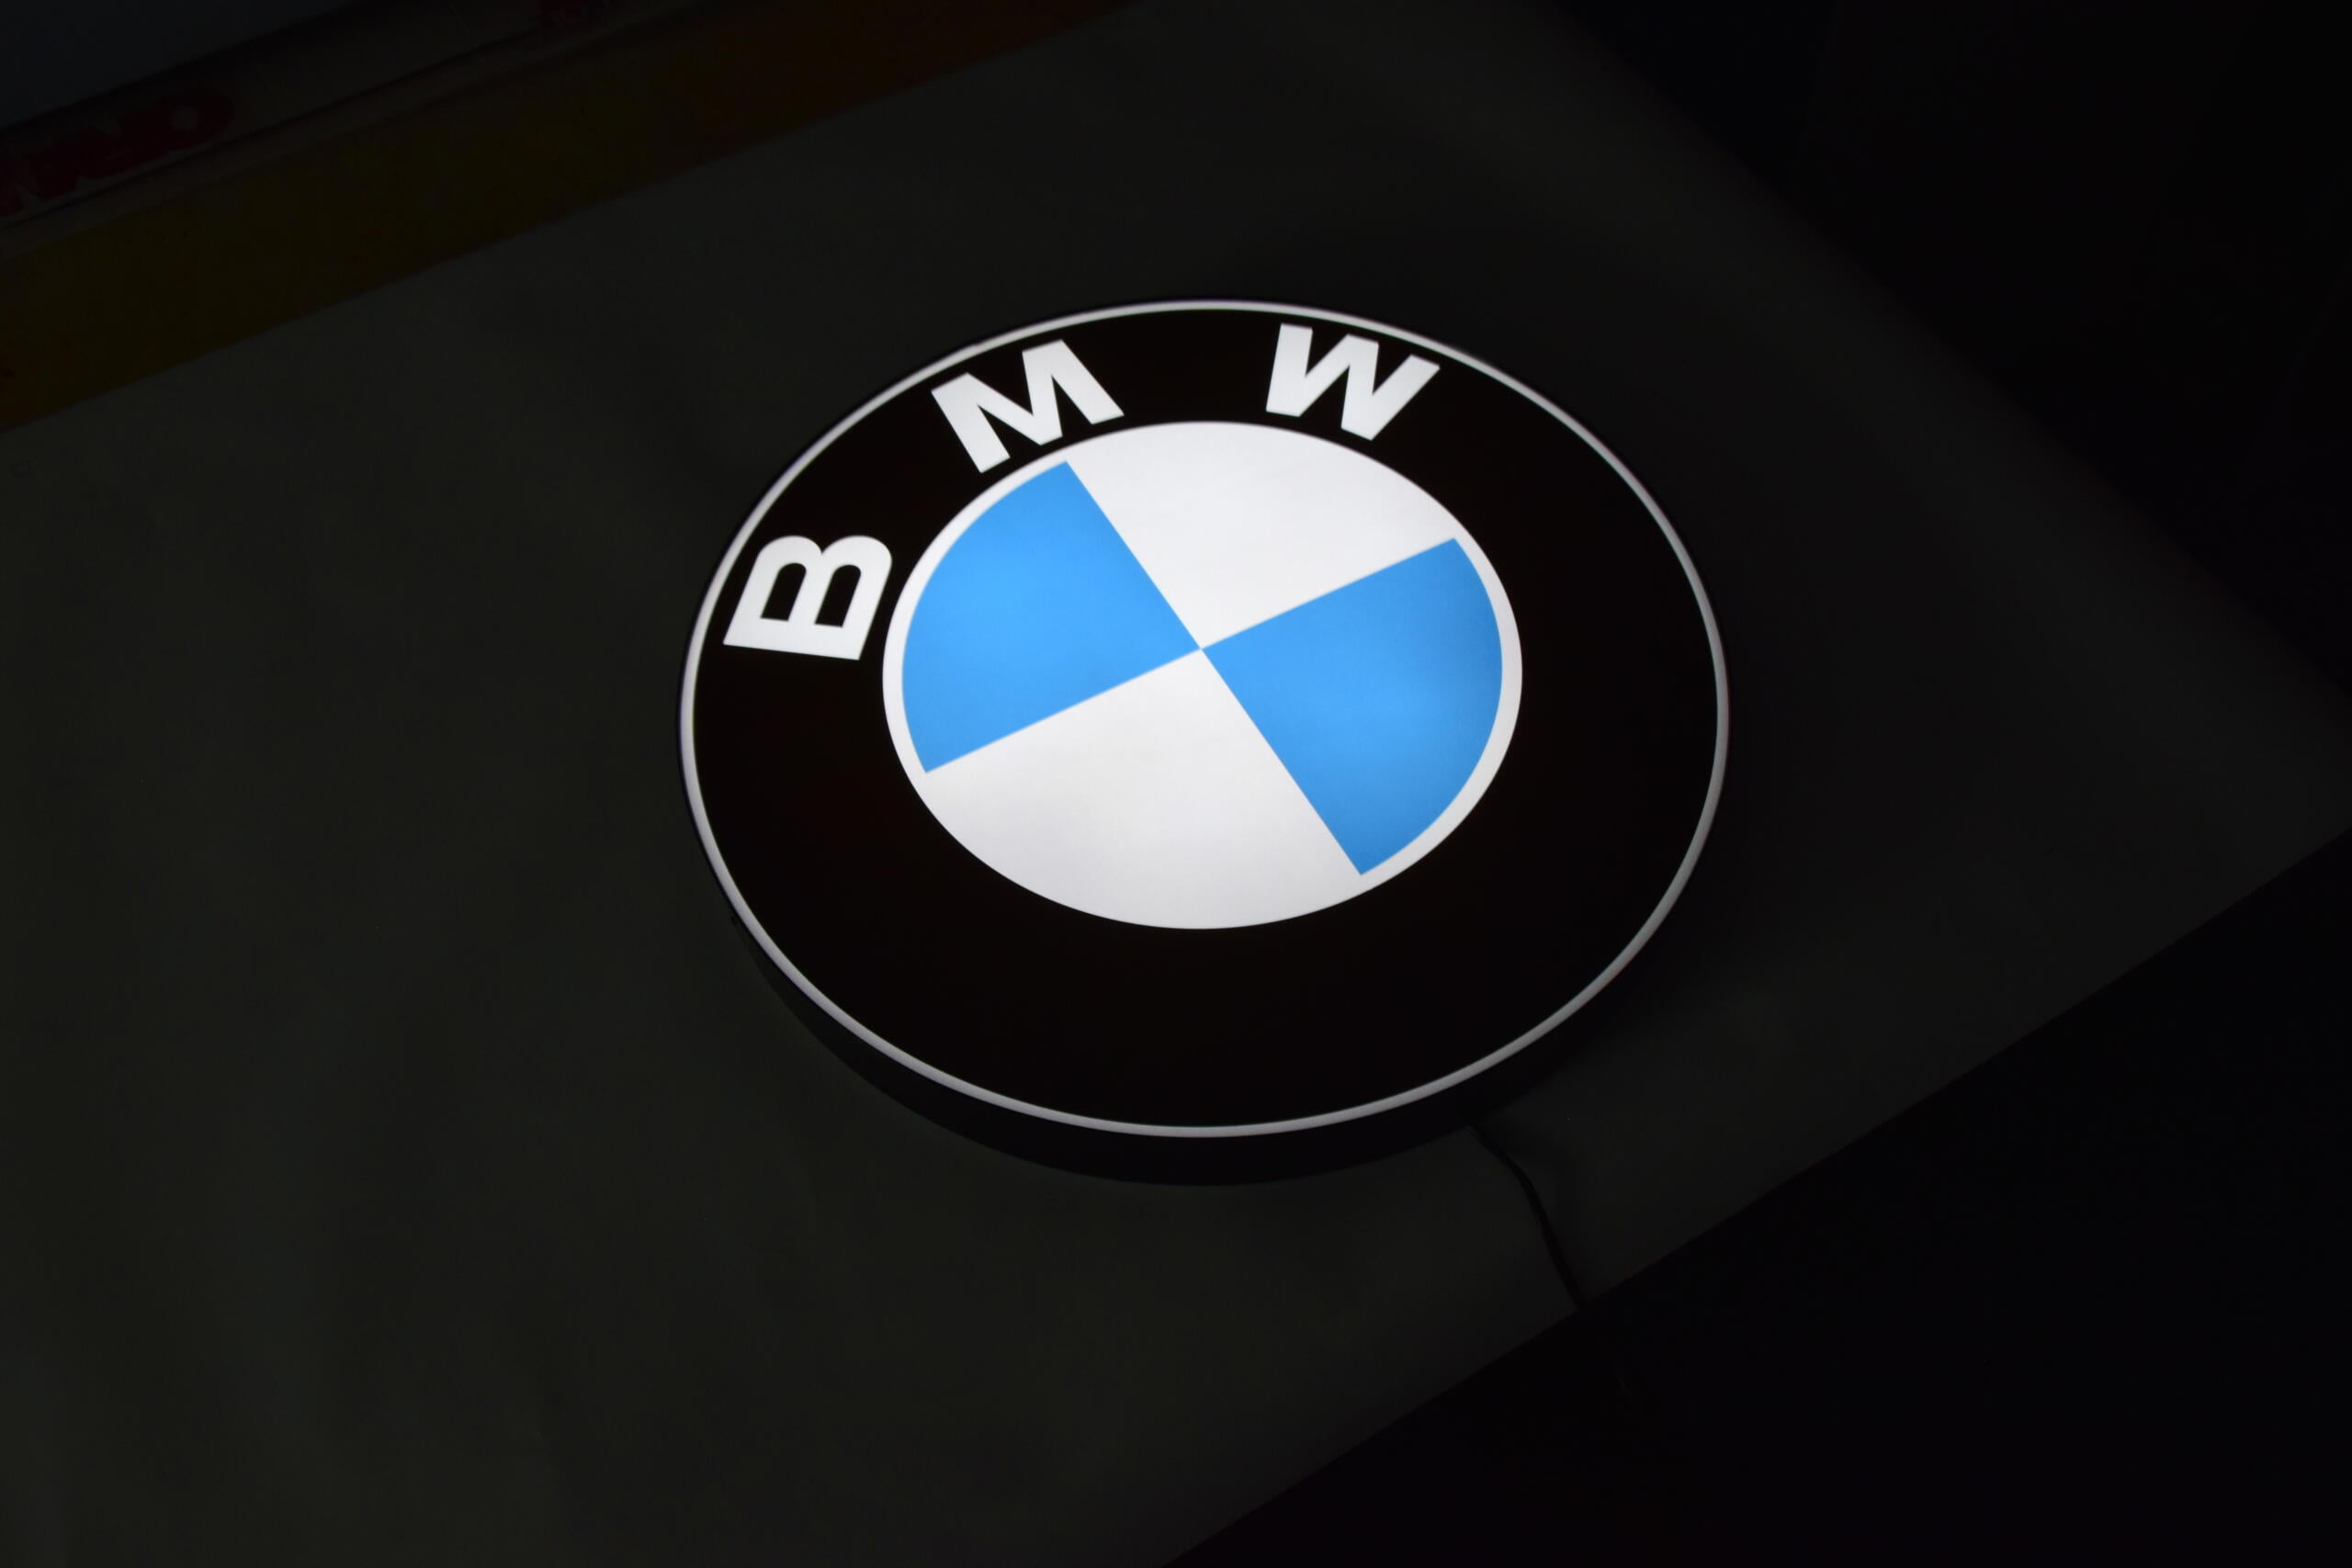 Led logo bmw - Cdiscount